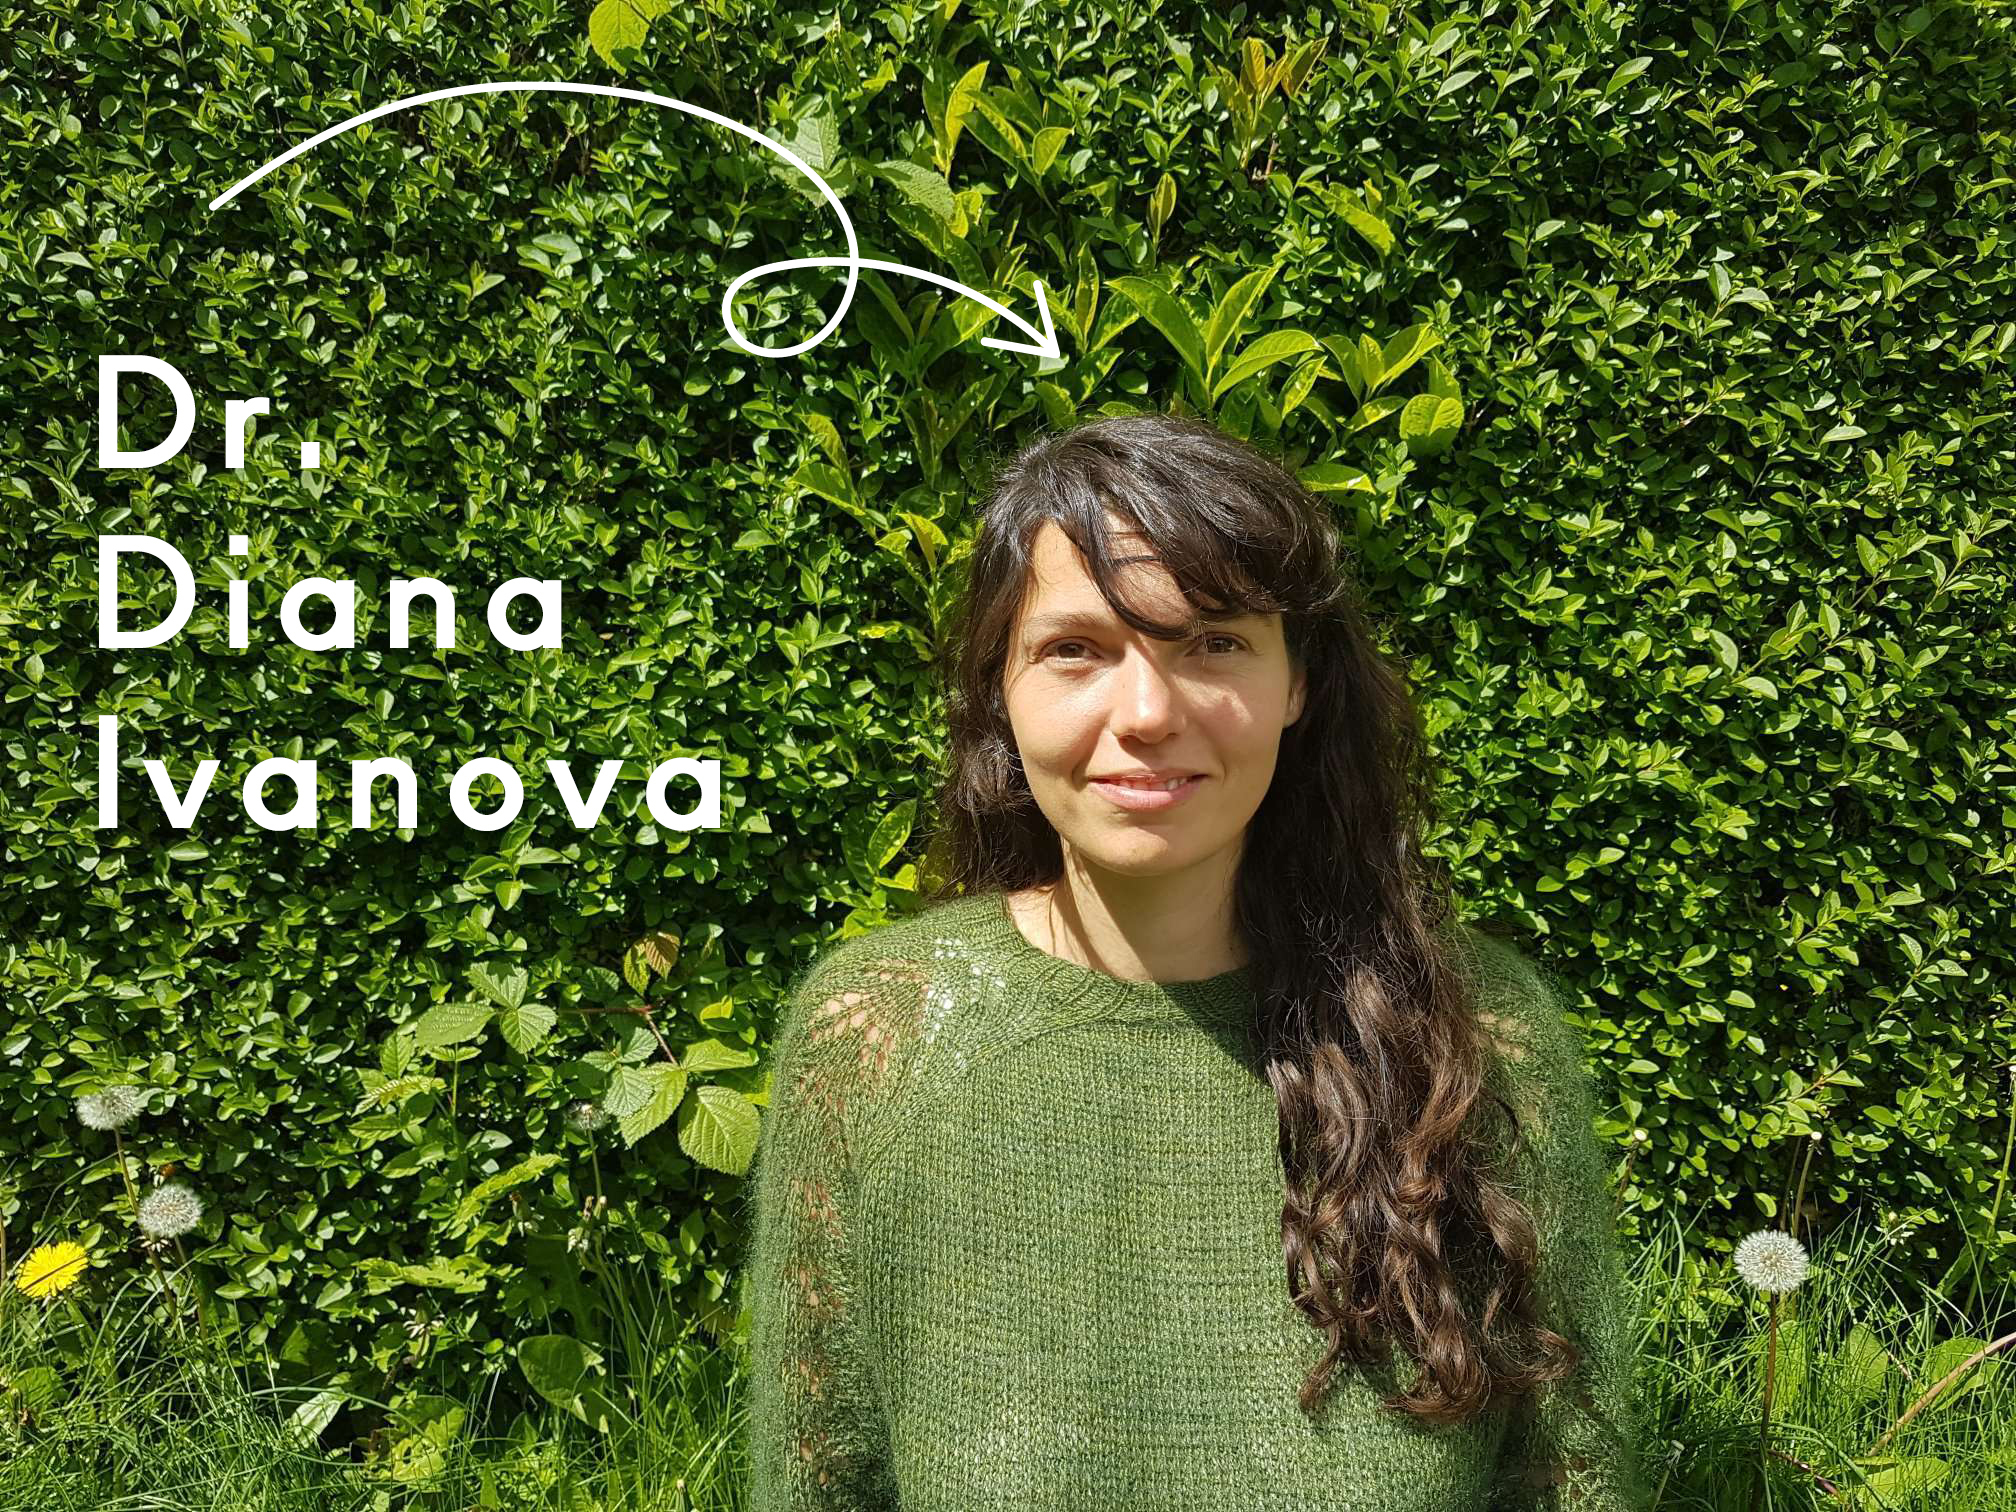 https://agood.com/blogs/community/diana-ivanova-interview